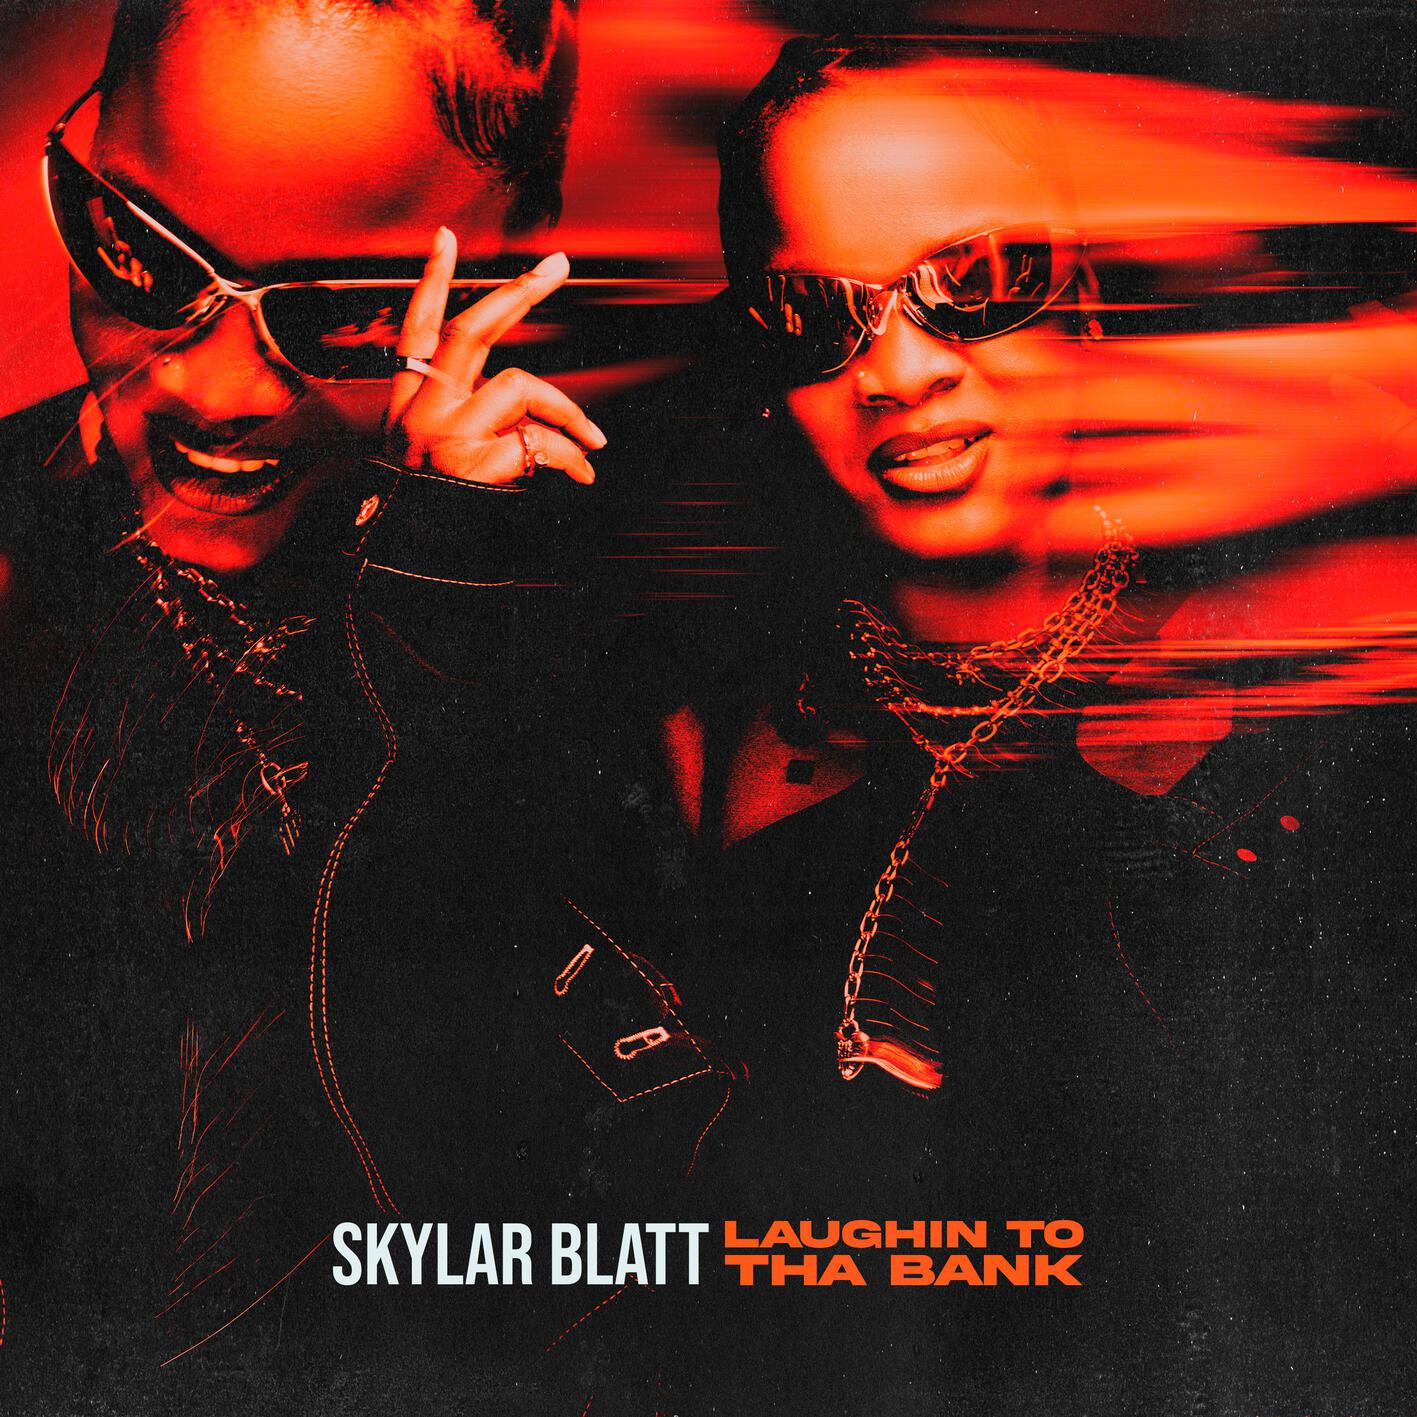 Skylar Blatt - Laughin To Tha Bank